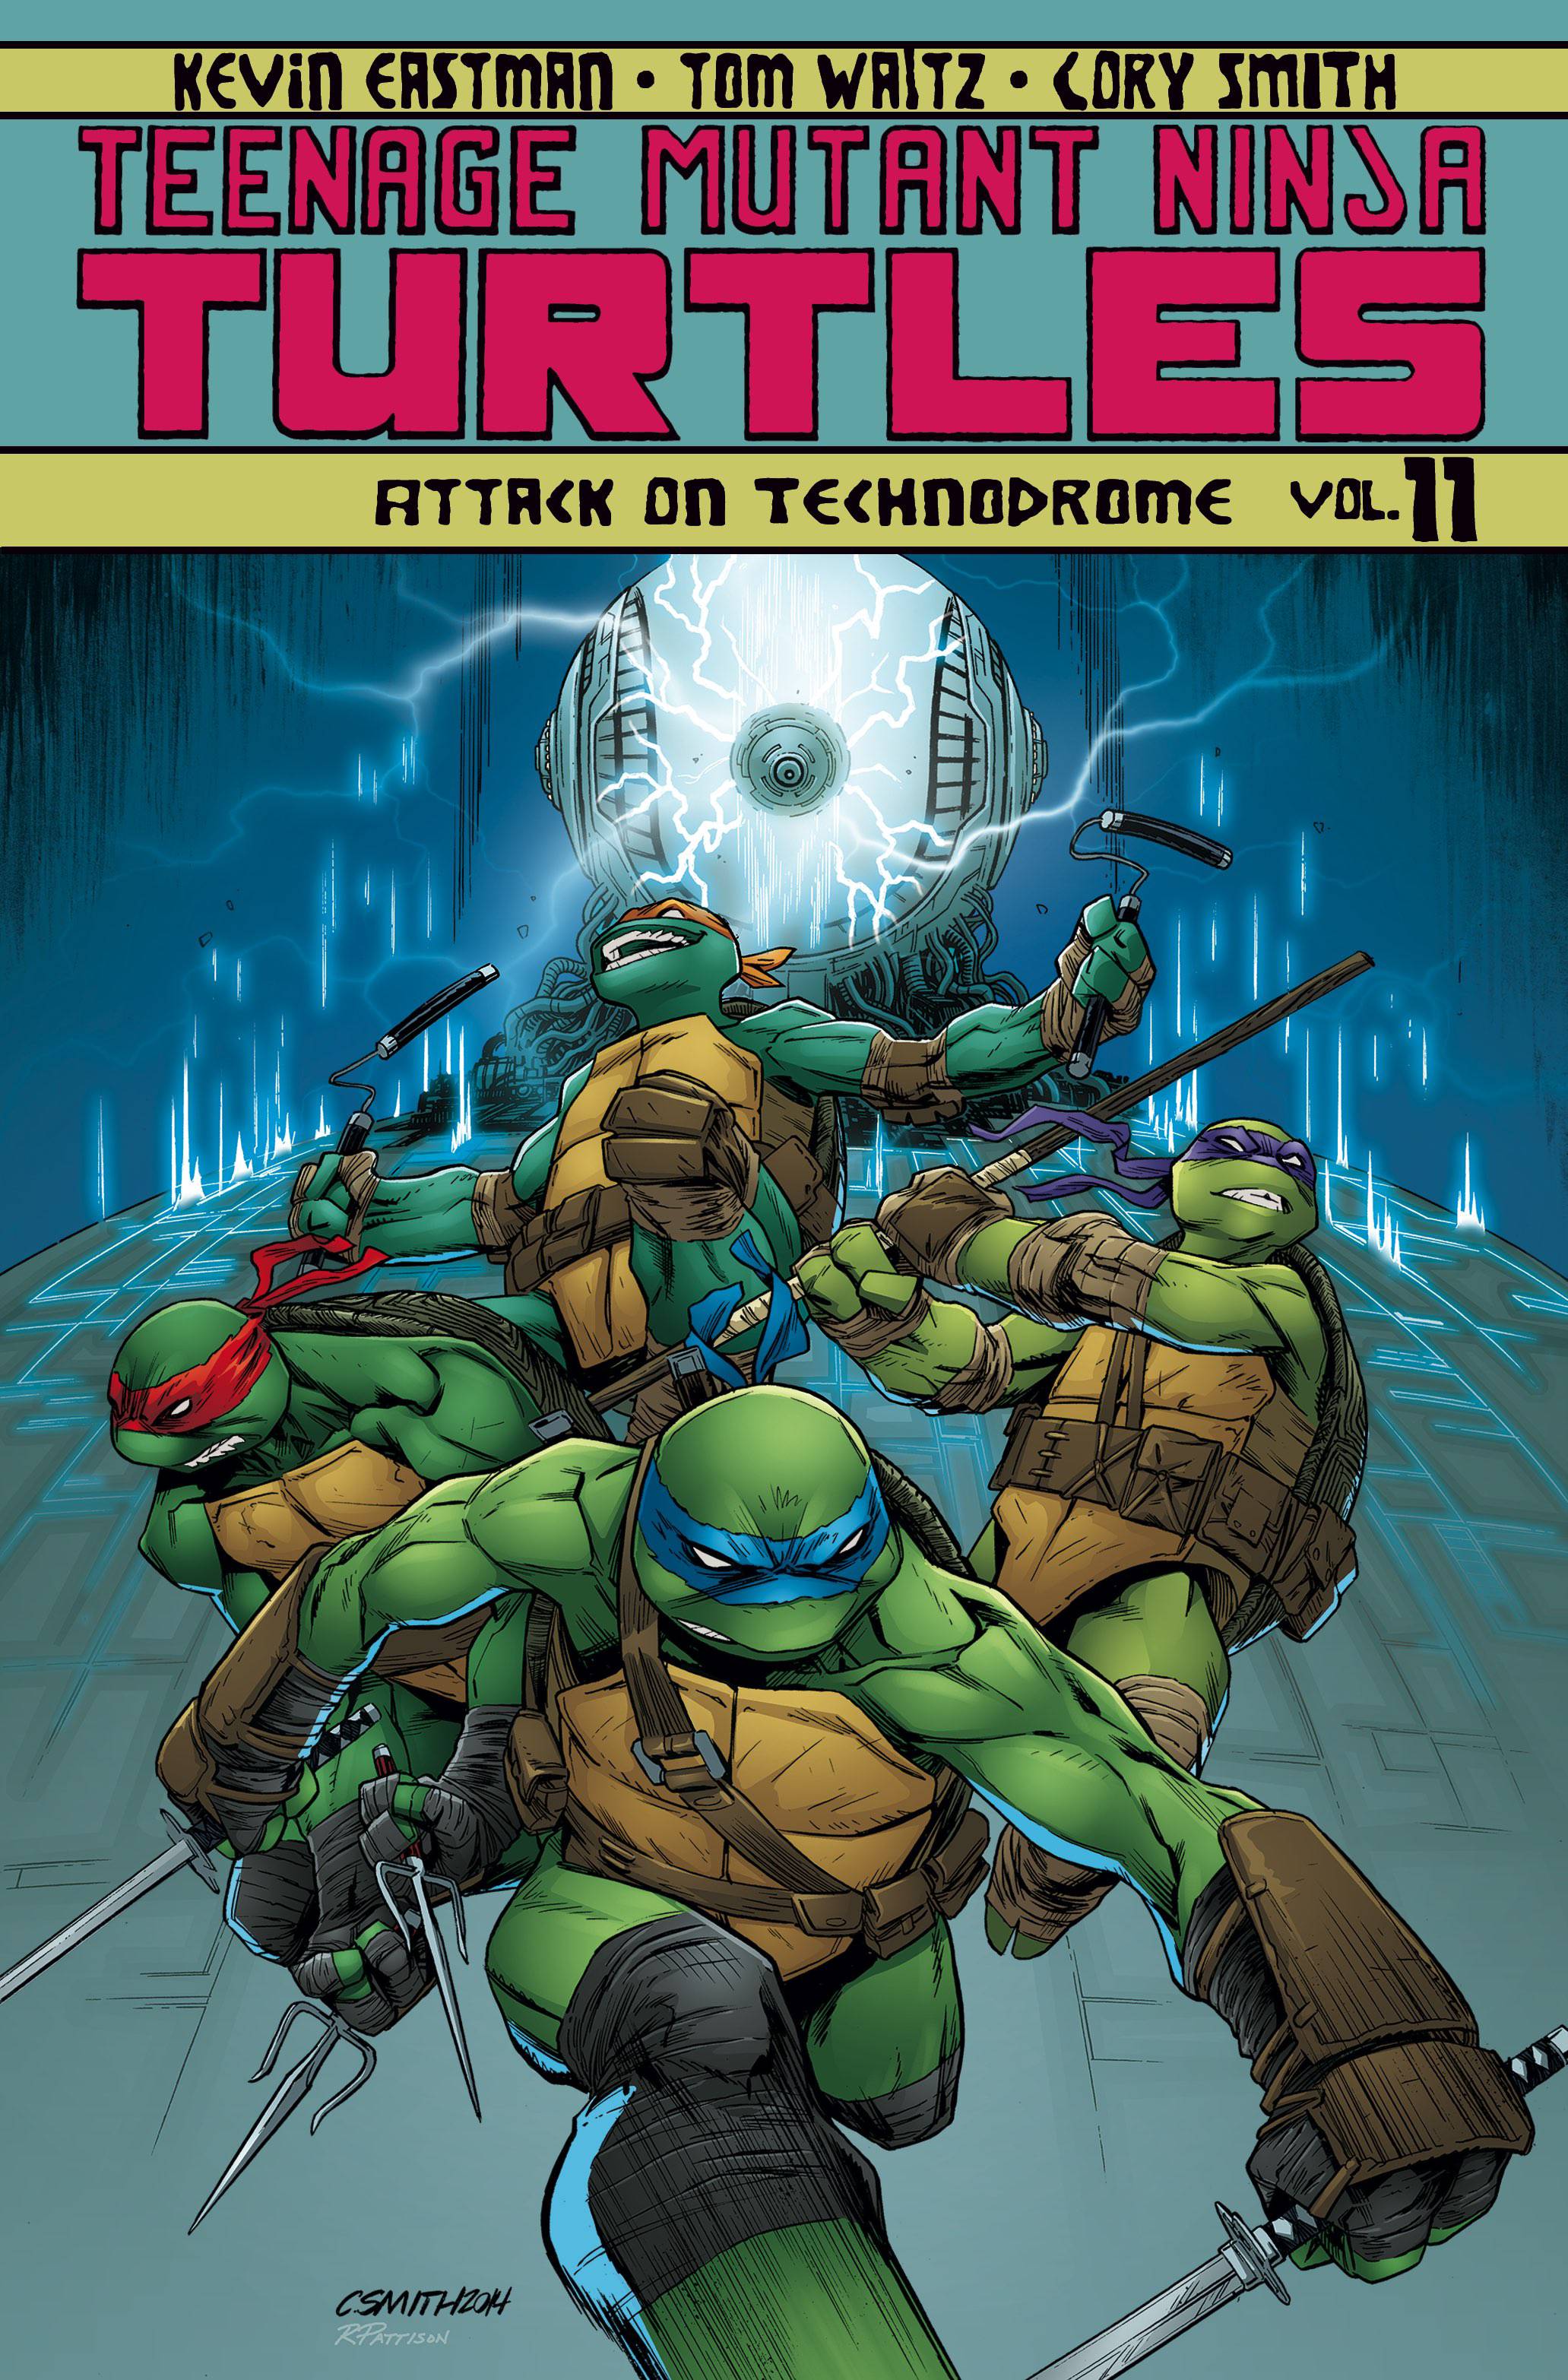 Teenage Mutant Ninja Turtles Ongoing Graphic Novel Volume 11 Attack On Technodrome